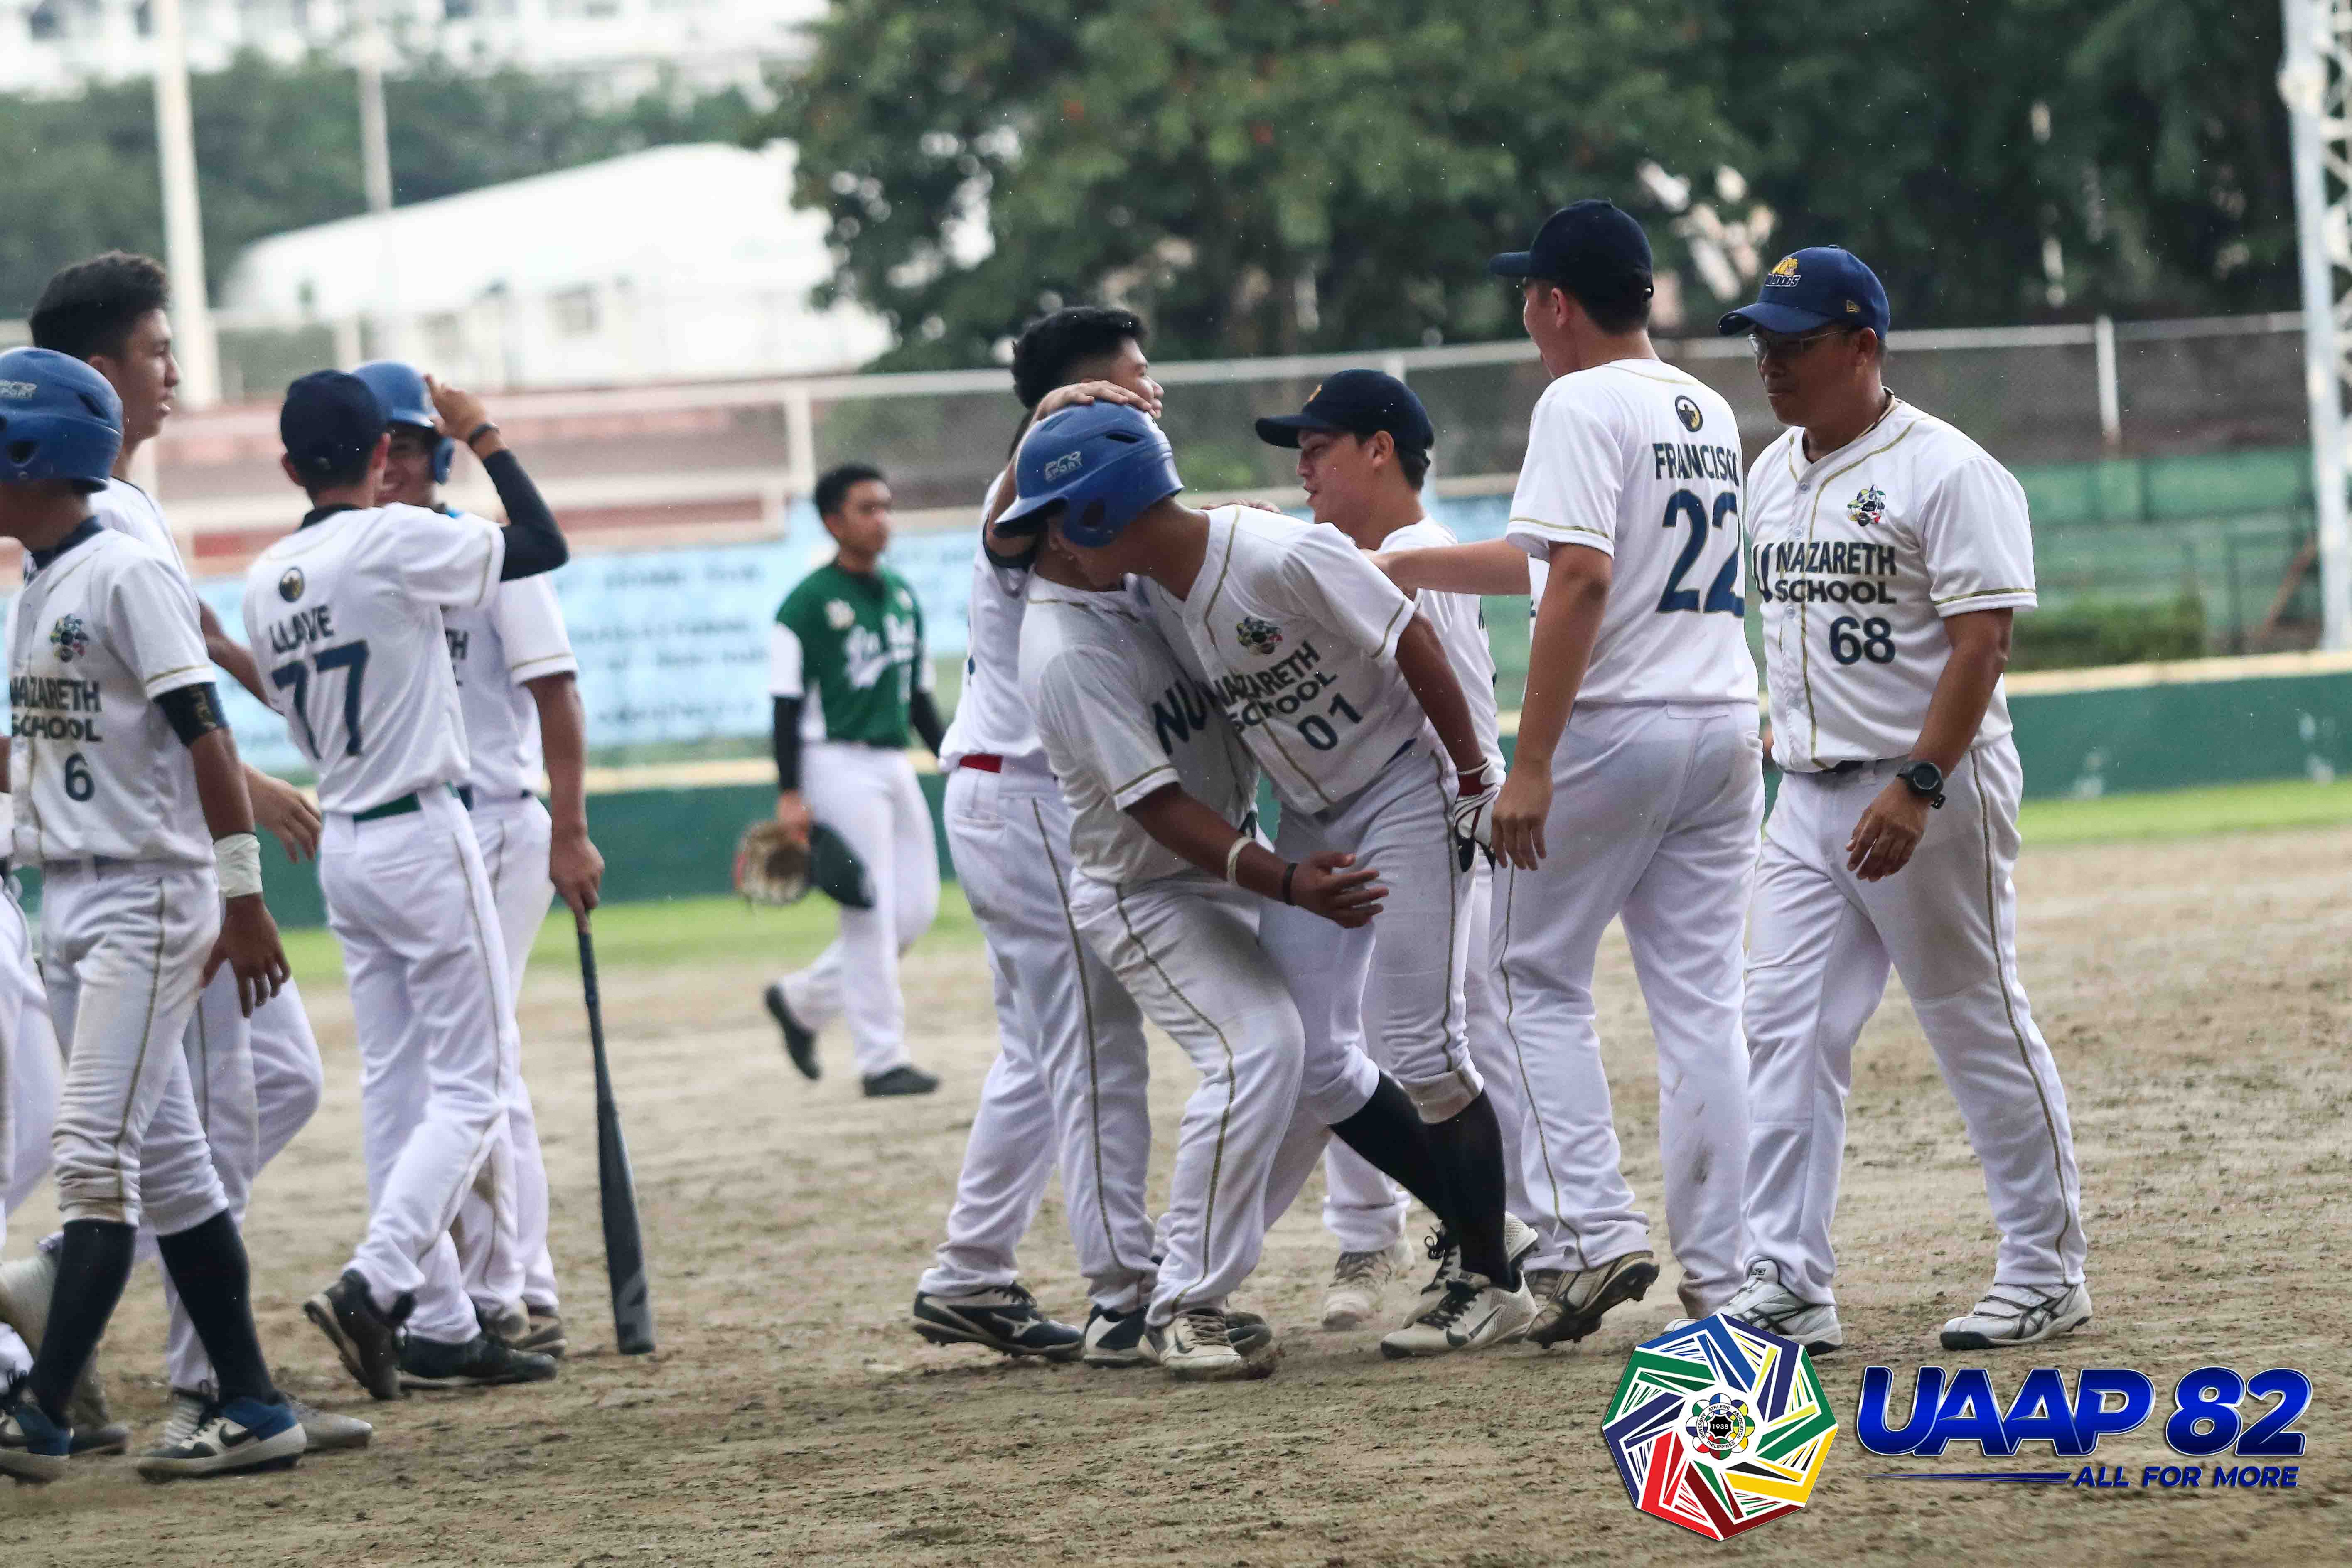 UAAP-82-Juniors-Baseball-NU-vs-DLSZ-Jio-Gorrido Clutch hits from Casanova, Gorpido lift Ateneo, NU to opening day wins ADMU Baseball DLSU News NU UAAP UST  - philippine sports news